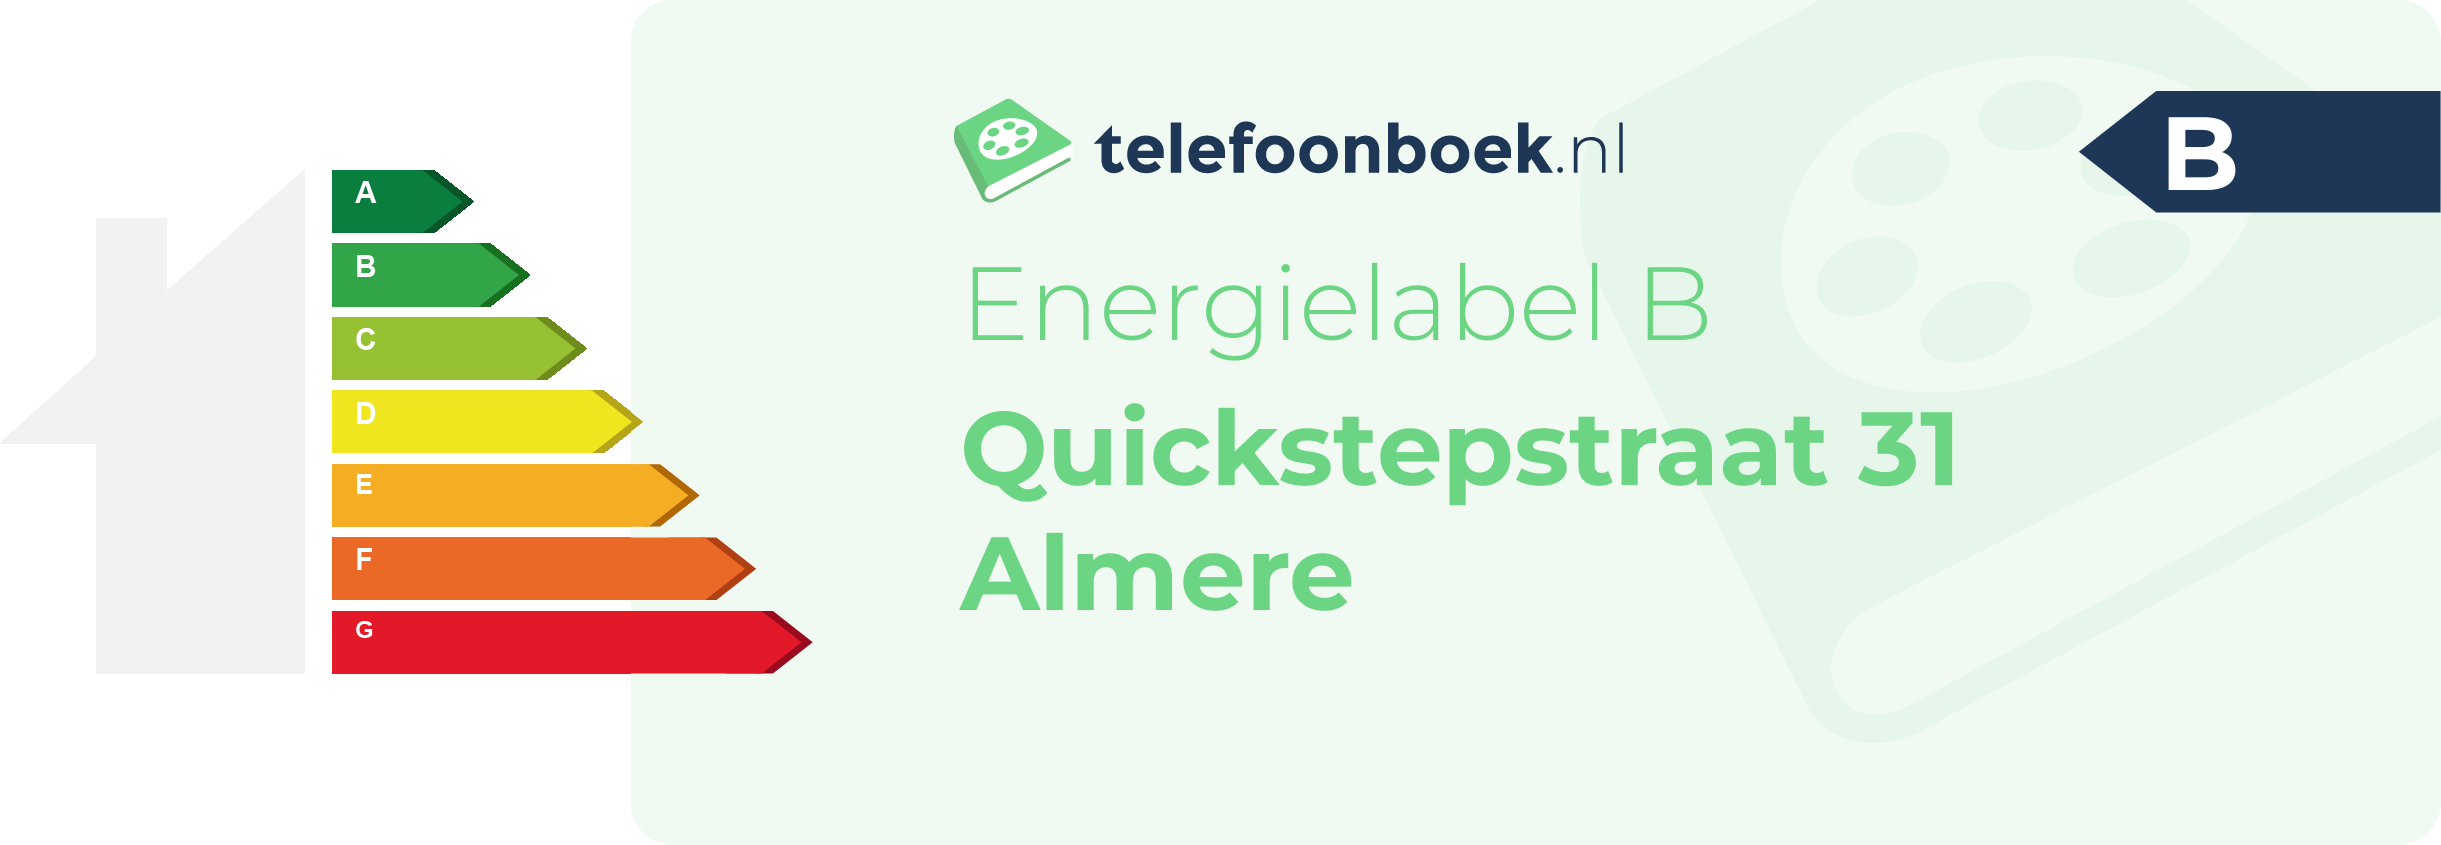 Energielabel Quickstepstraat 31 Almere